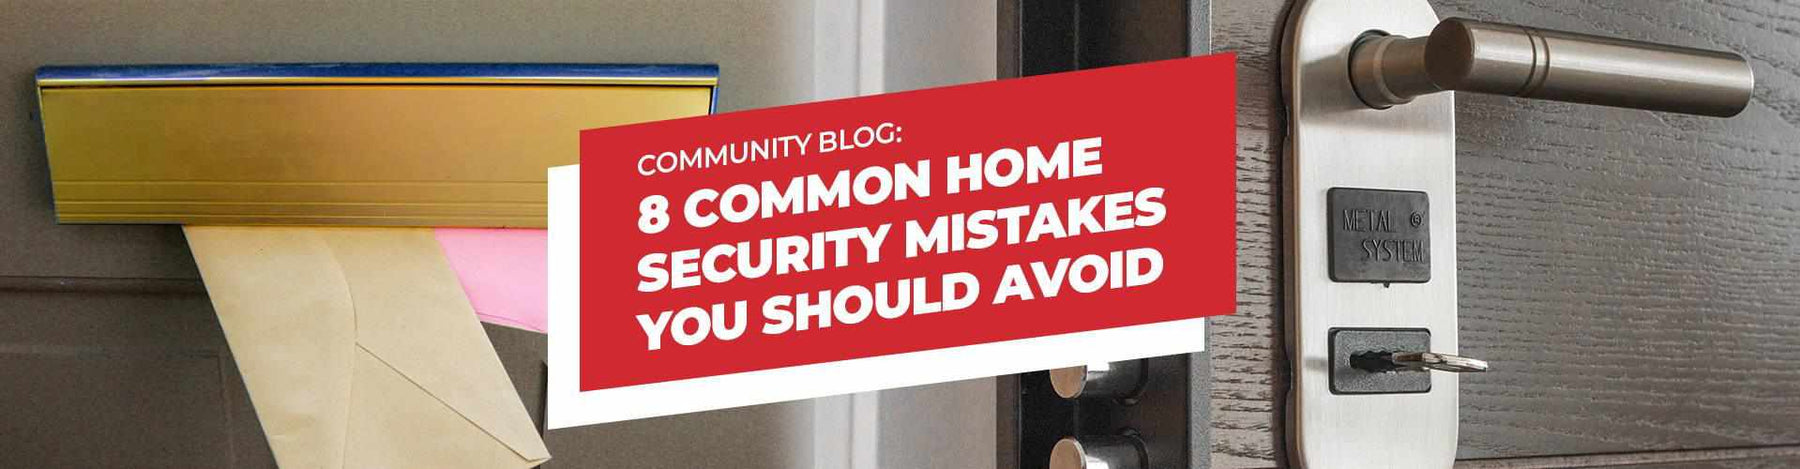 8 Common Home Security Mistakes You Should Avoid - - BlackboxMyCar Canada